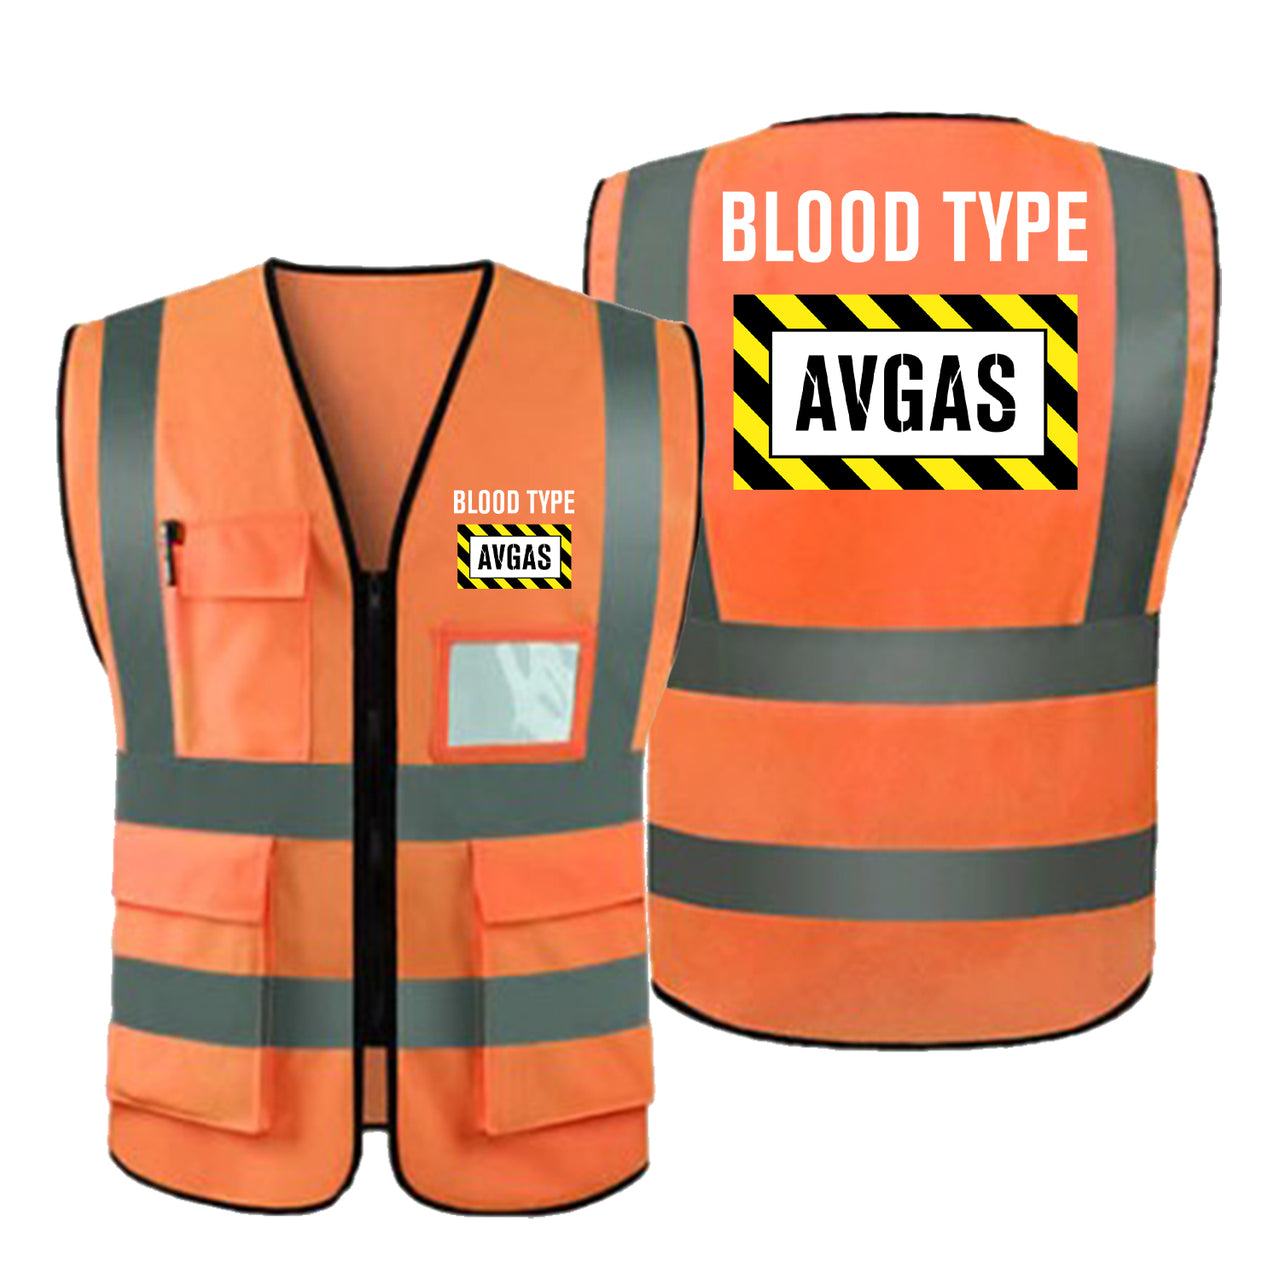 Blood Type AVGAS Designed Reflective Vests